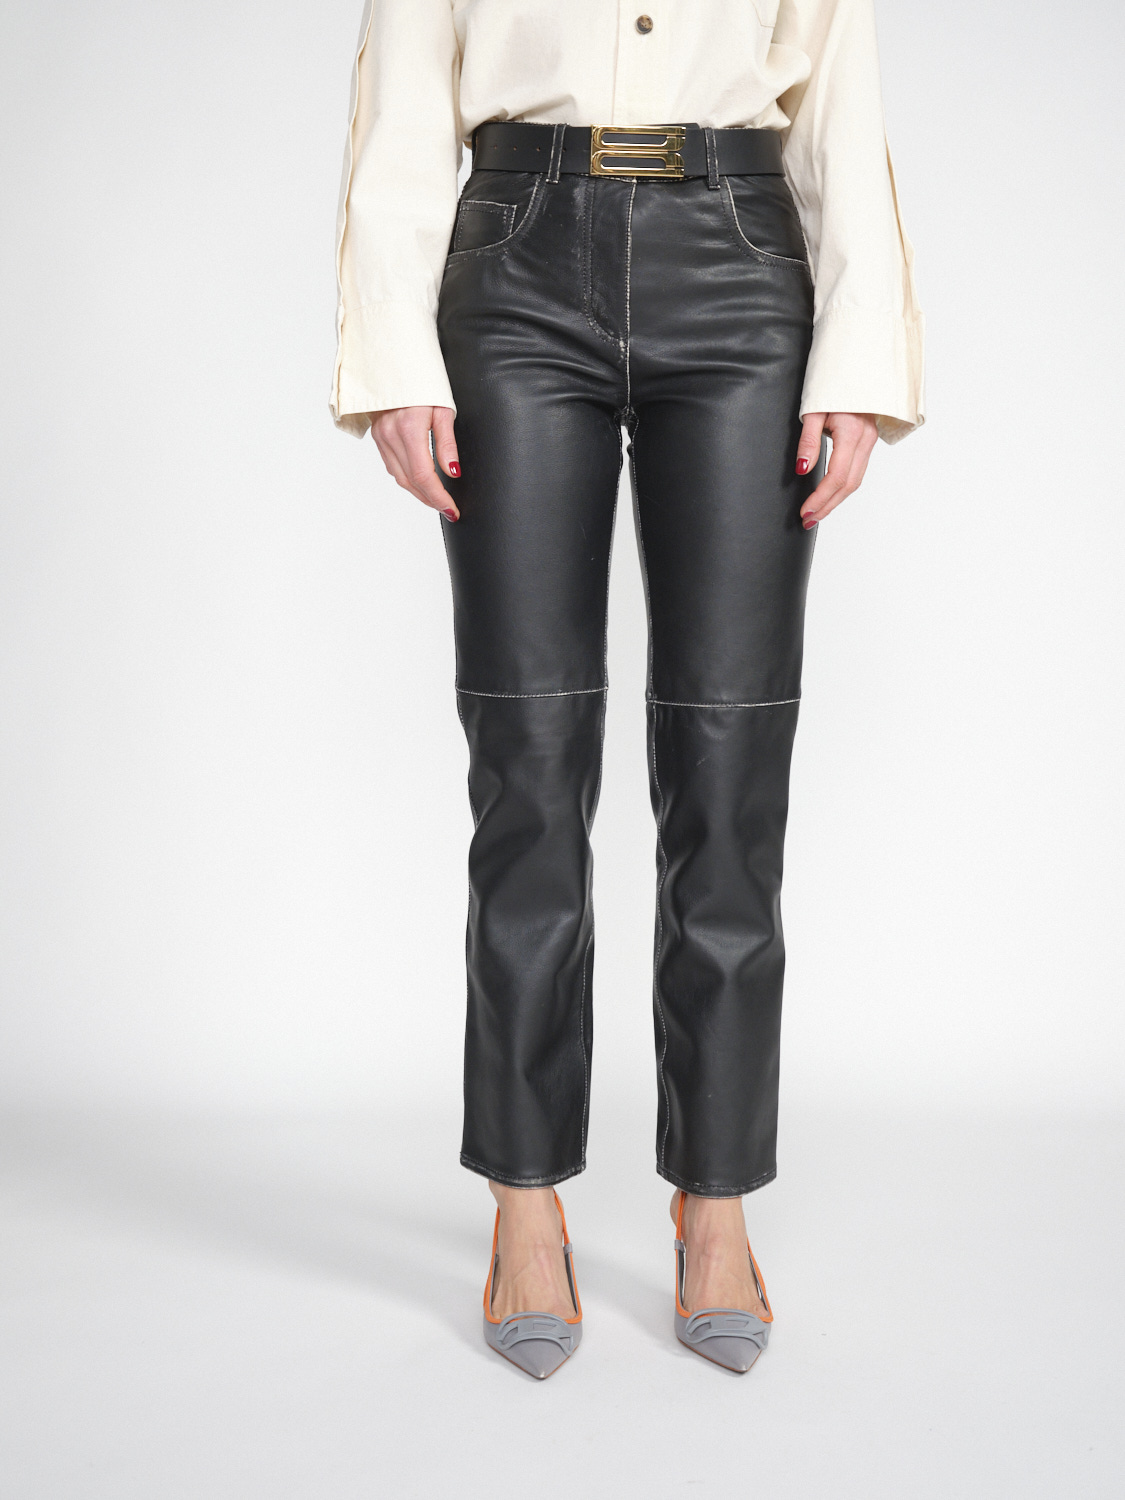 Victoria Beckham Pantaloni in pelle effetto vintage nero 36